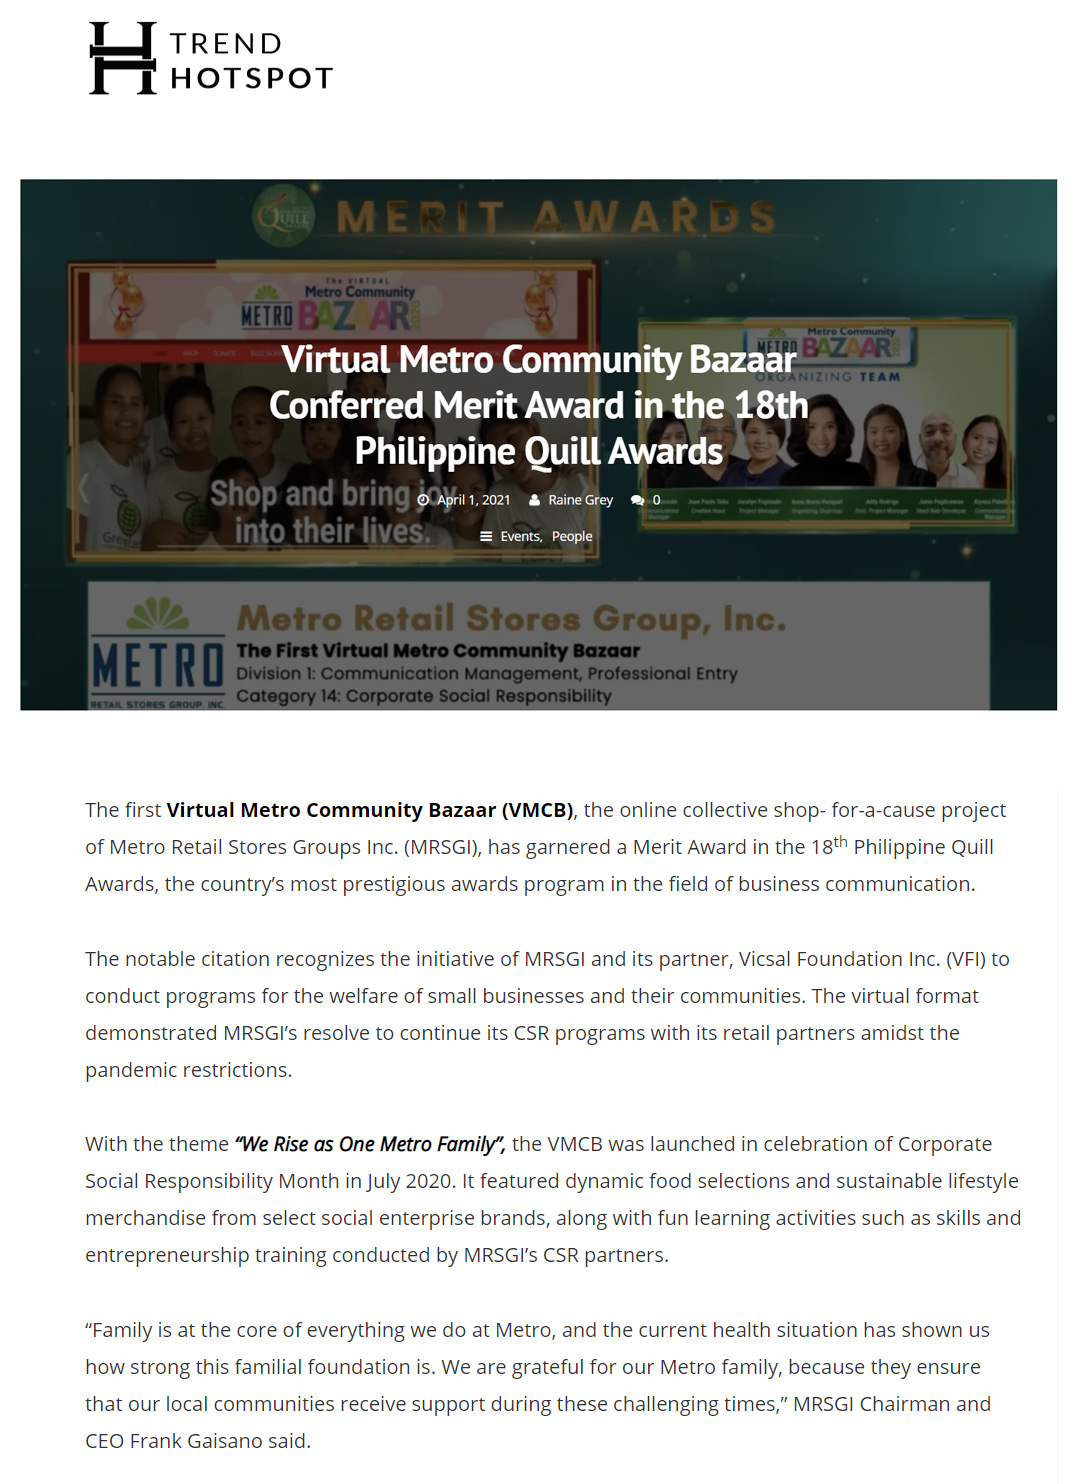 April 7 2021 Virtual Metro Community Bazaar Conferred Merit Award in the 18th Philippine Quill Awards Trend Hotspot